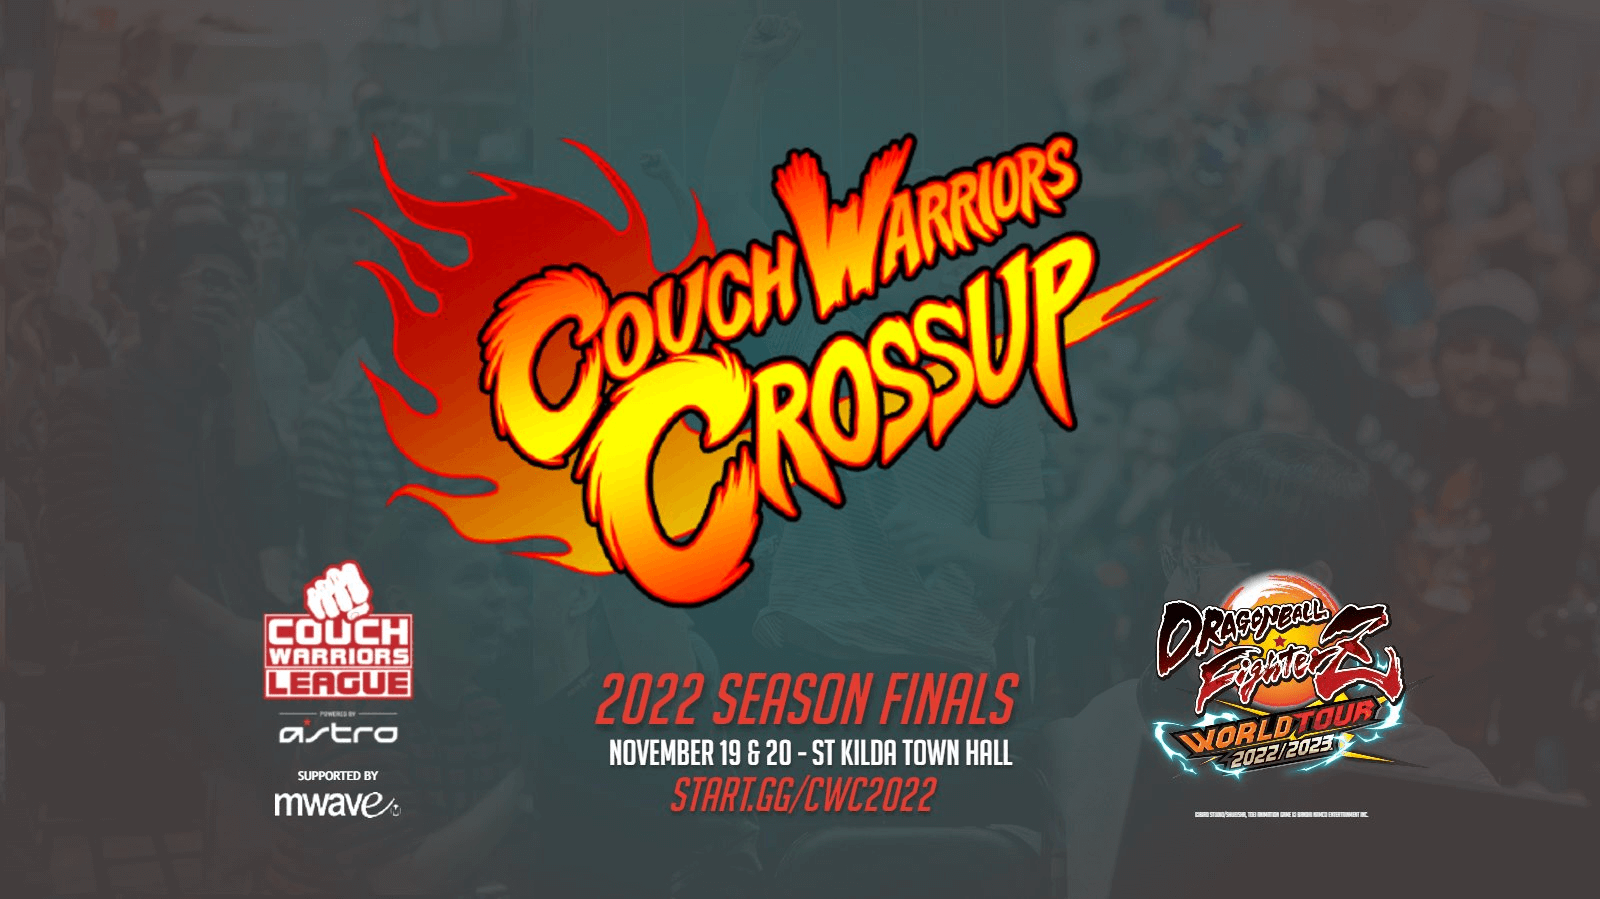 CouchWarriors Crossup 2022: Fighting Esports in Australia